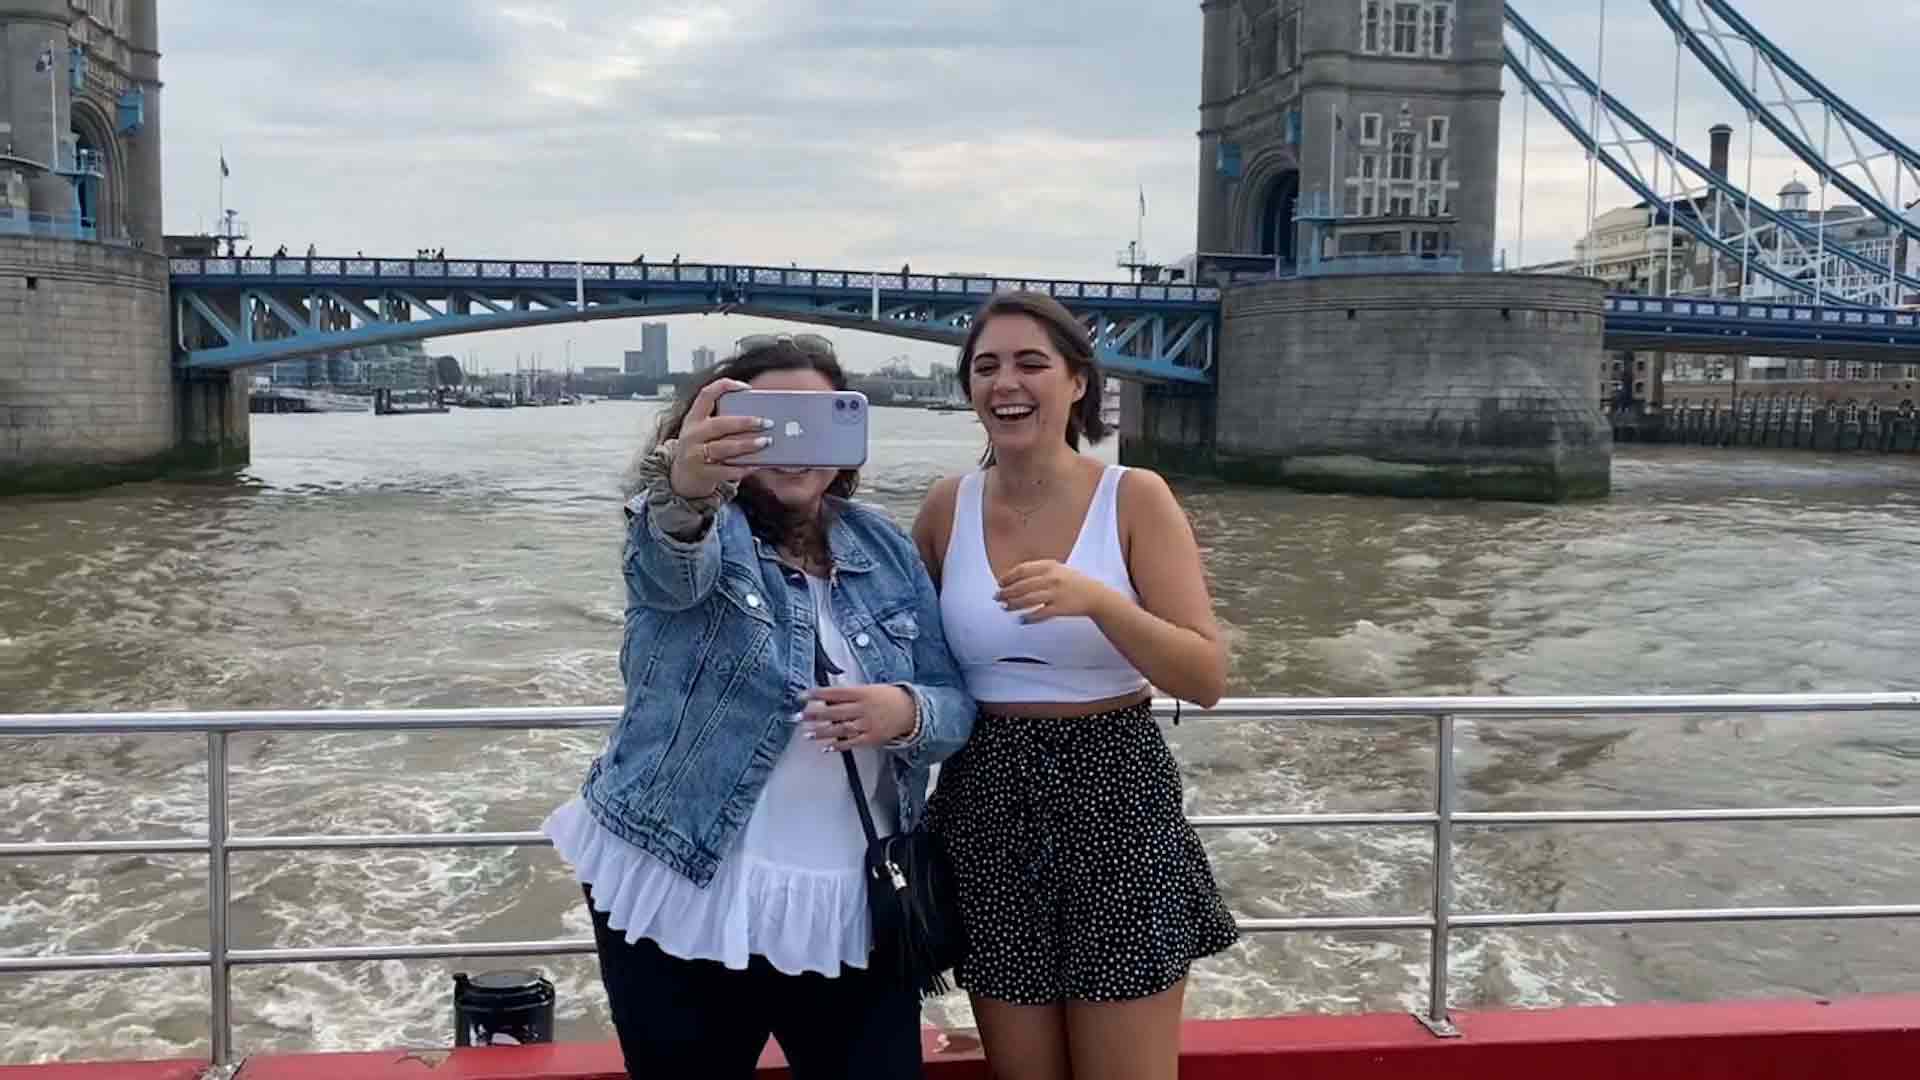 Selfie with Tower Bridge in background